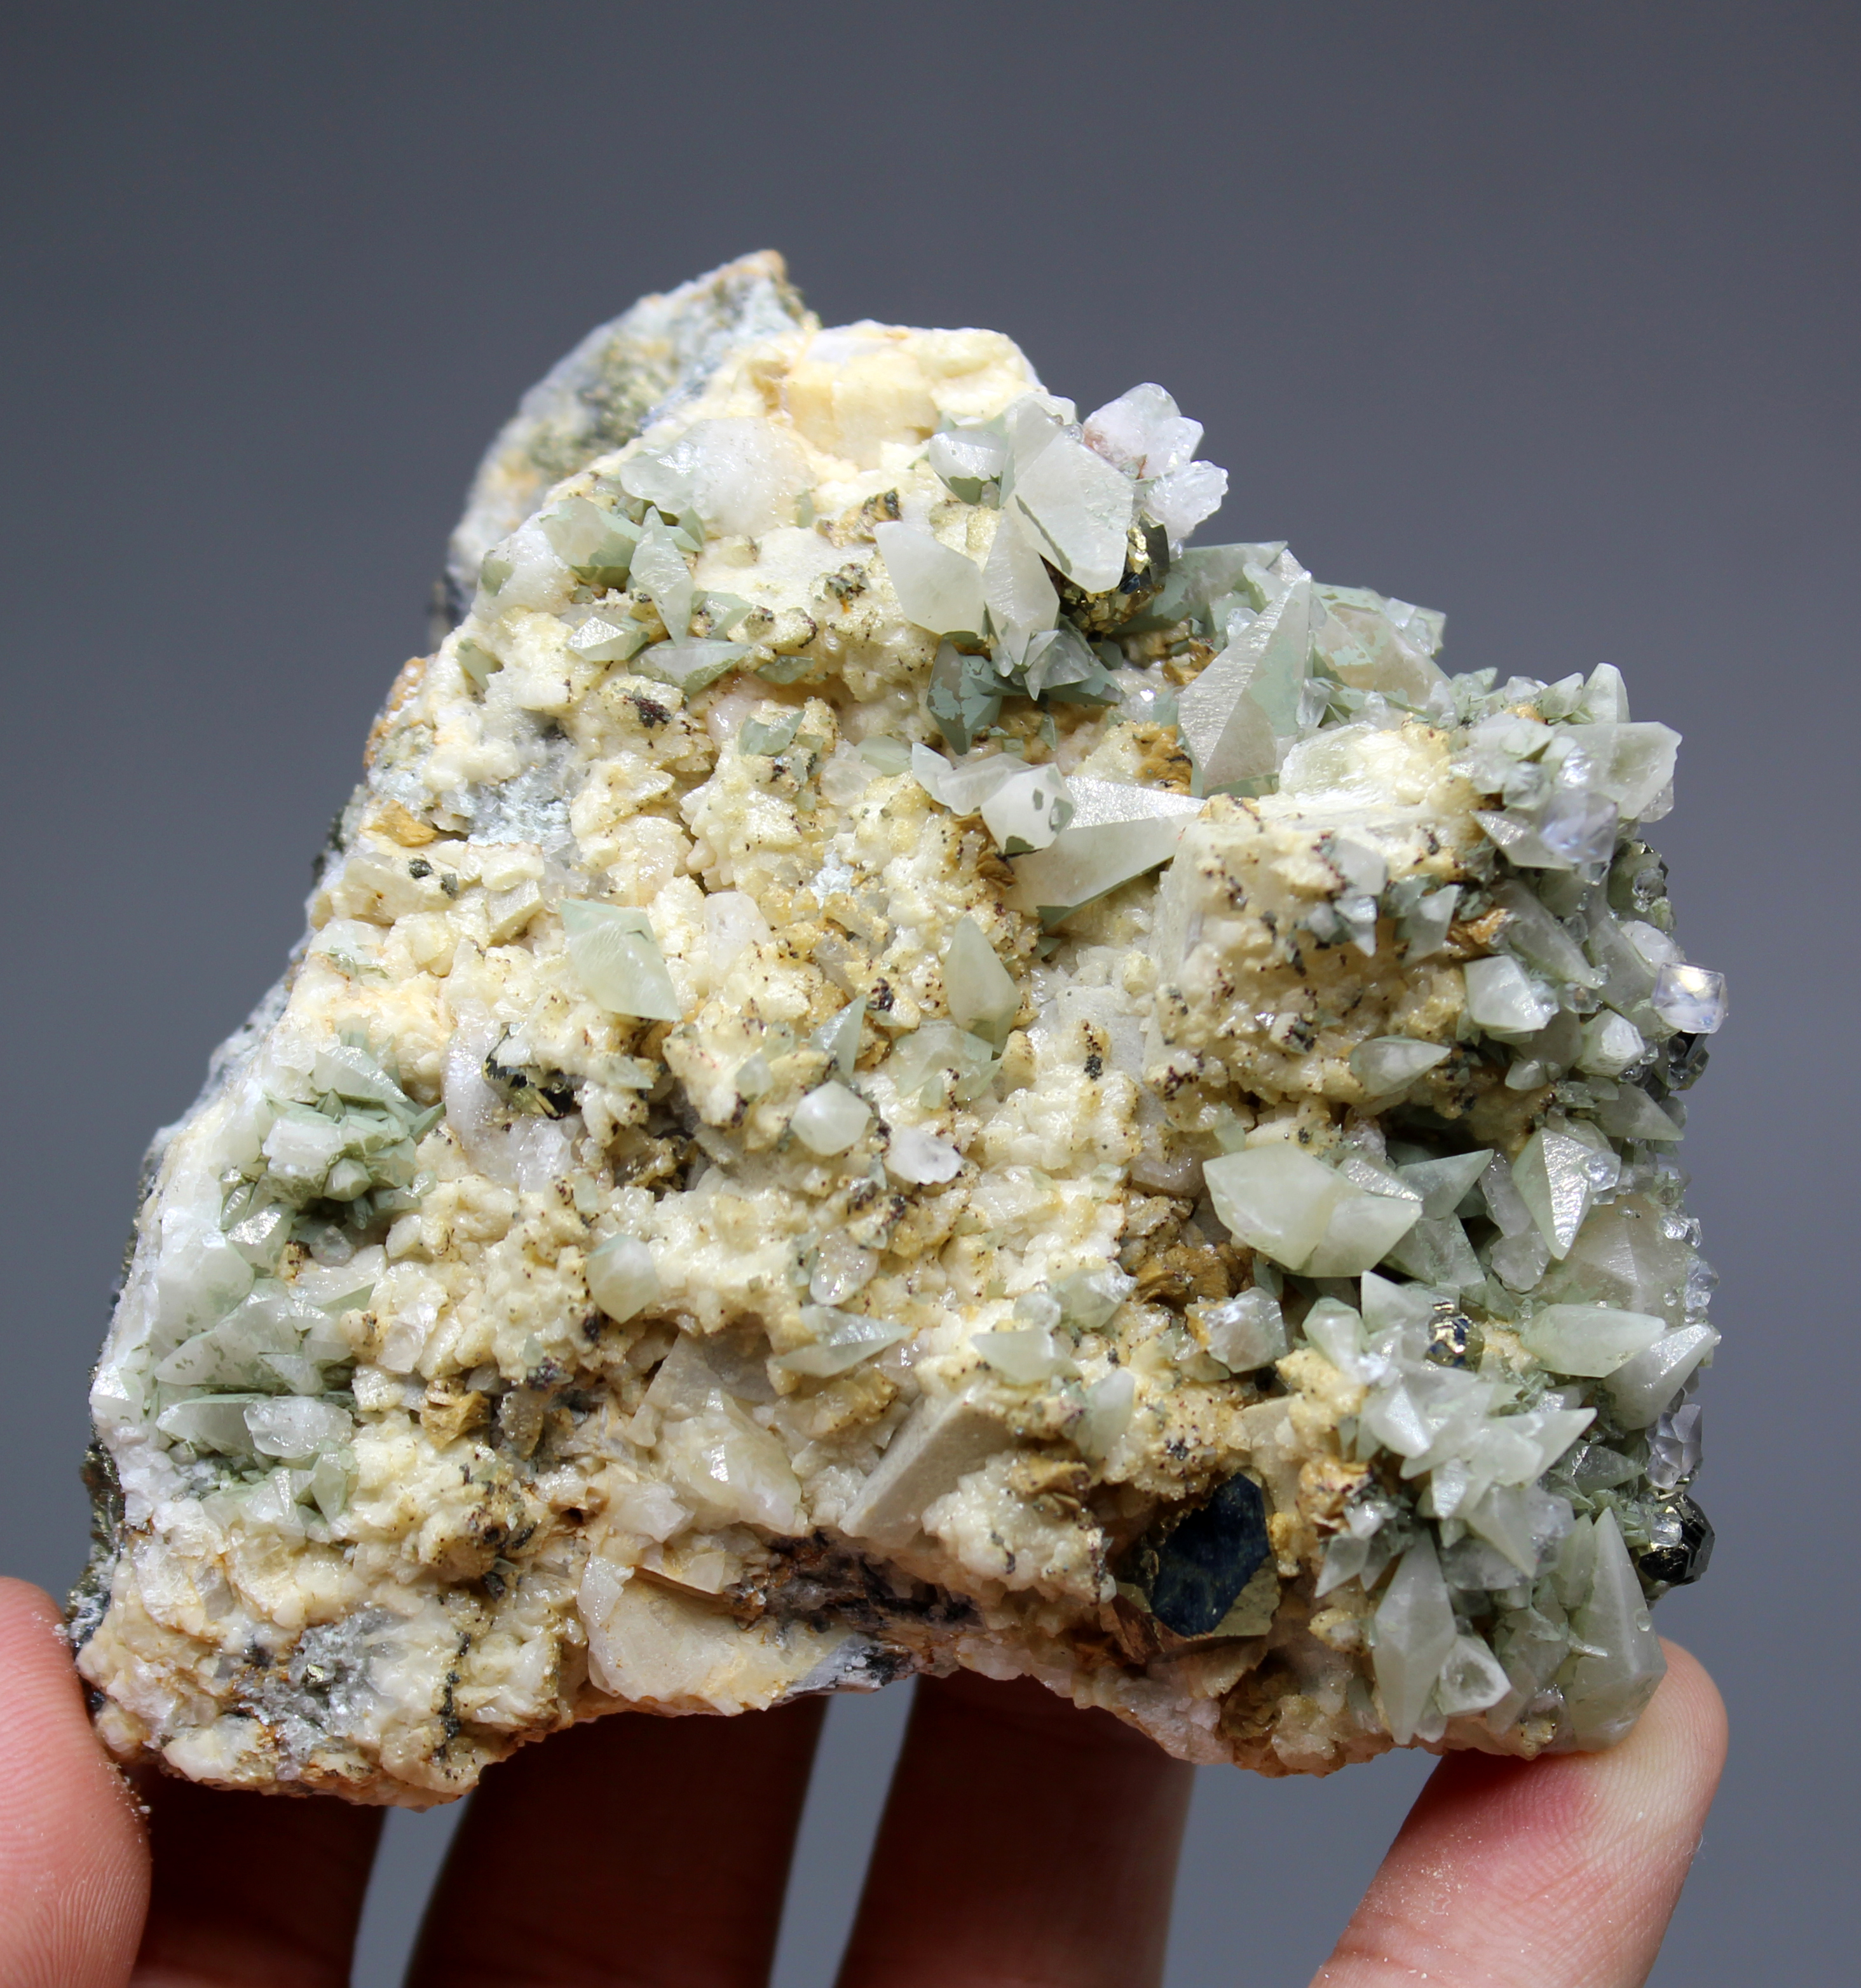 313g Natural rare pyrite, dolomite and calcite symbiotic mineral specimens stones and crystals healing crystals quartz